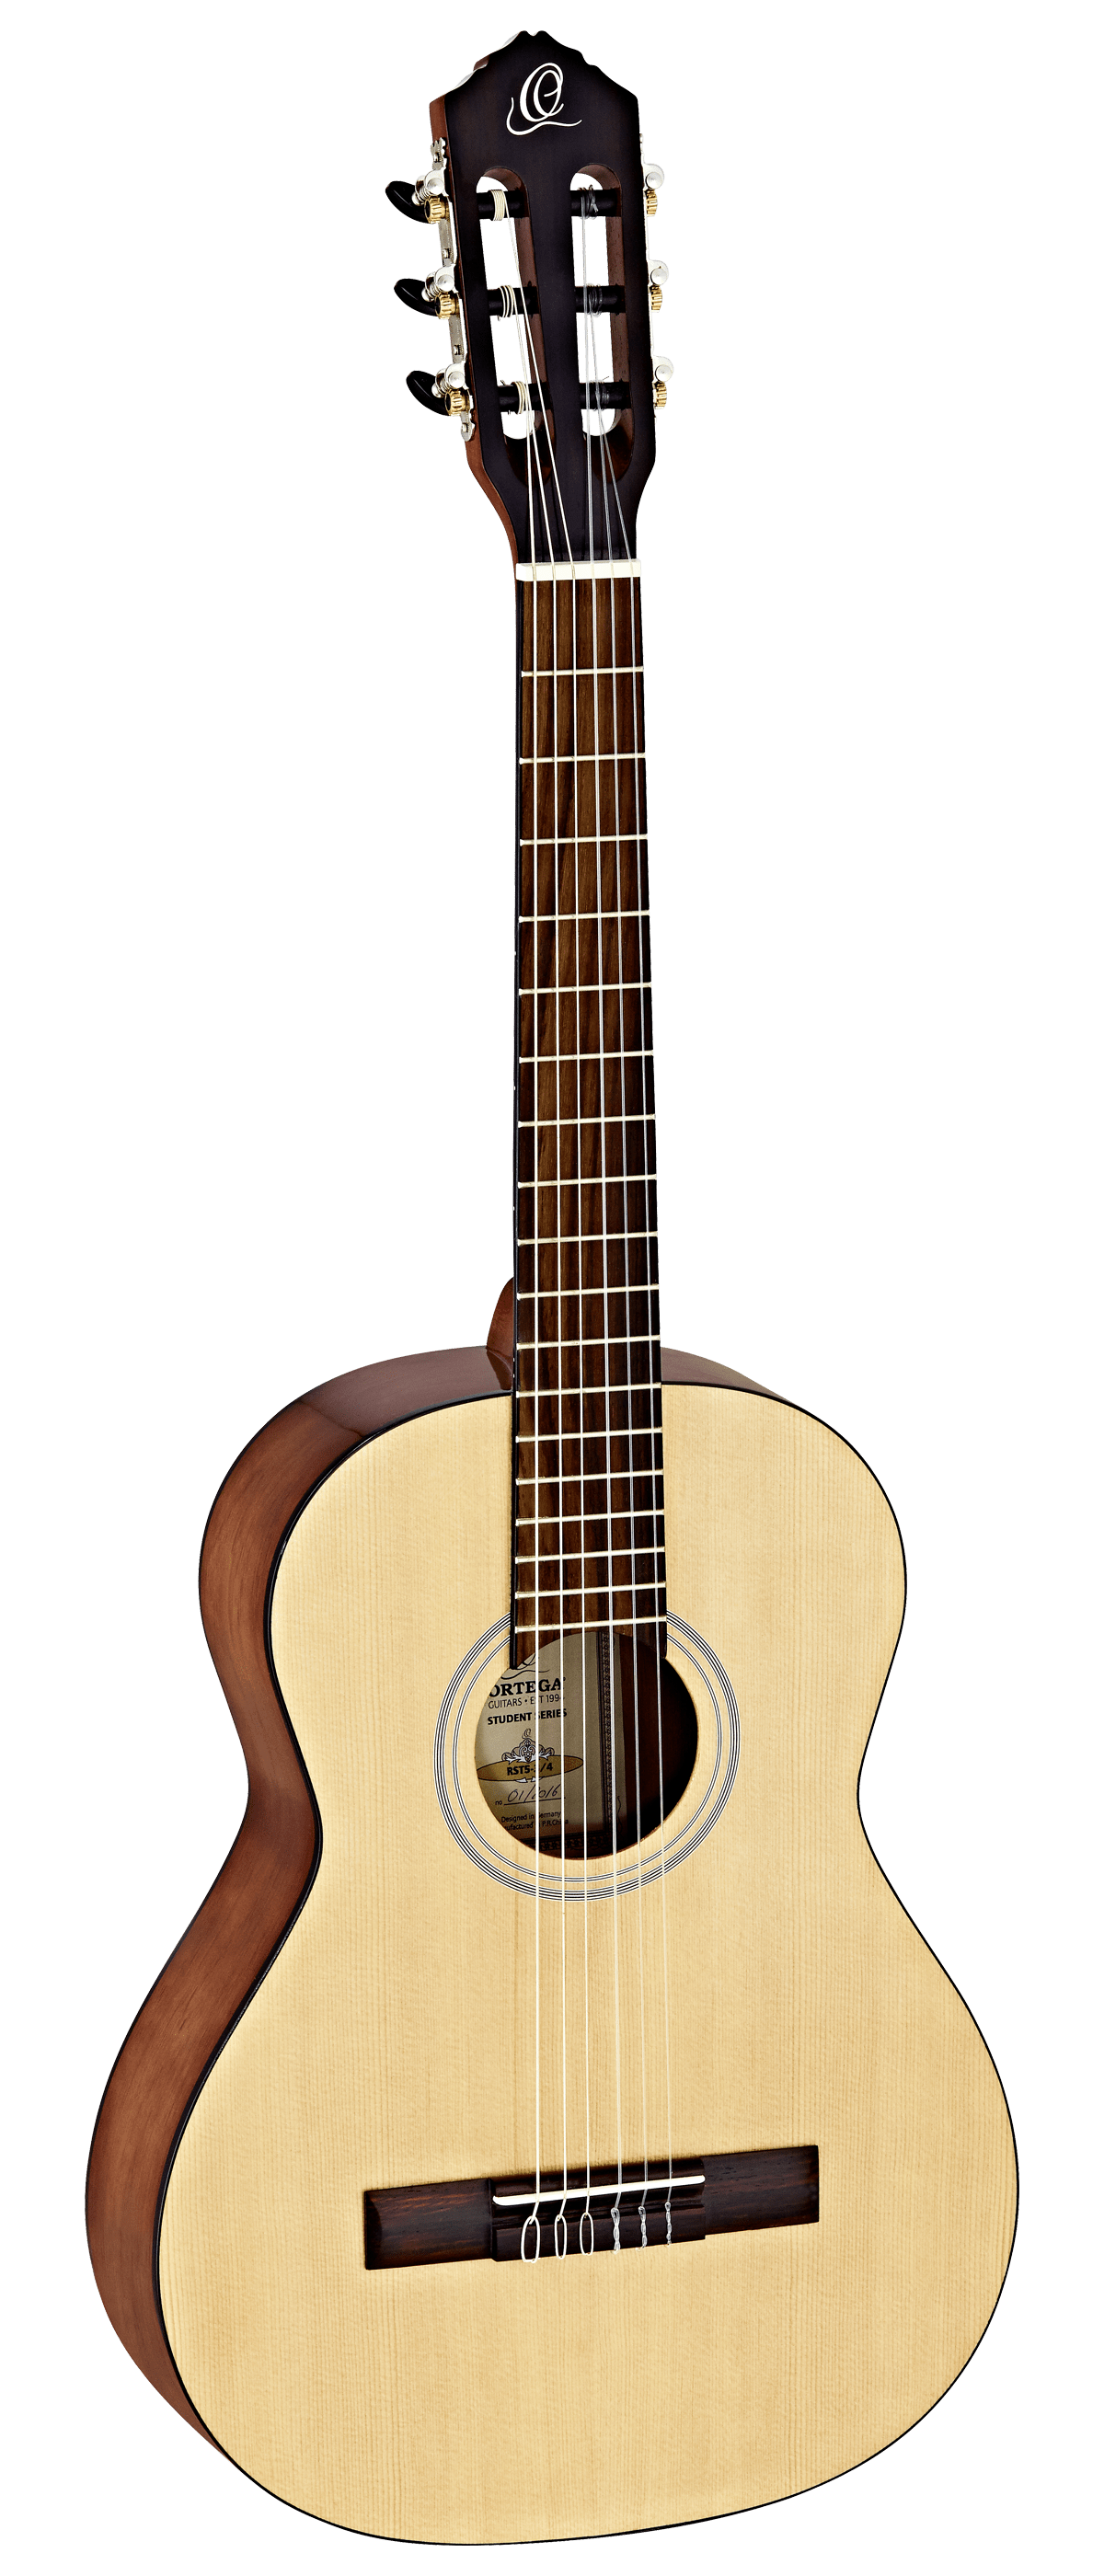 Ortega Student Series 3/4 Size Acoustic Guitar Guitars on...